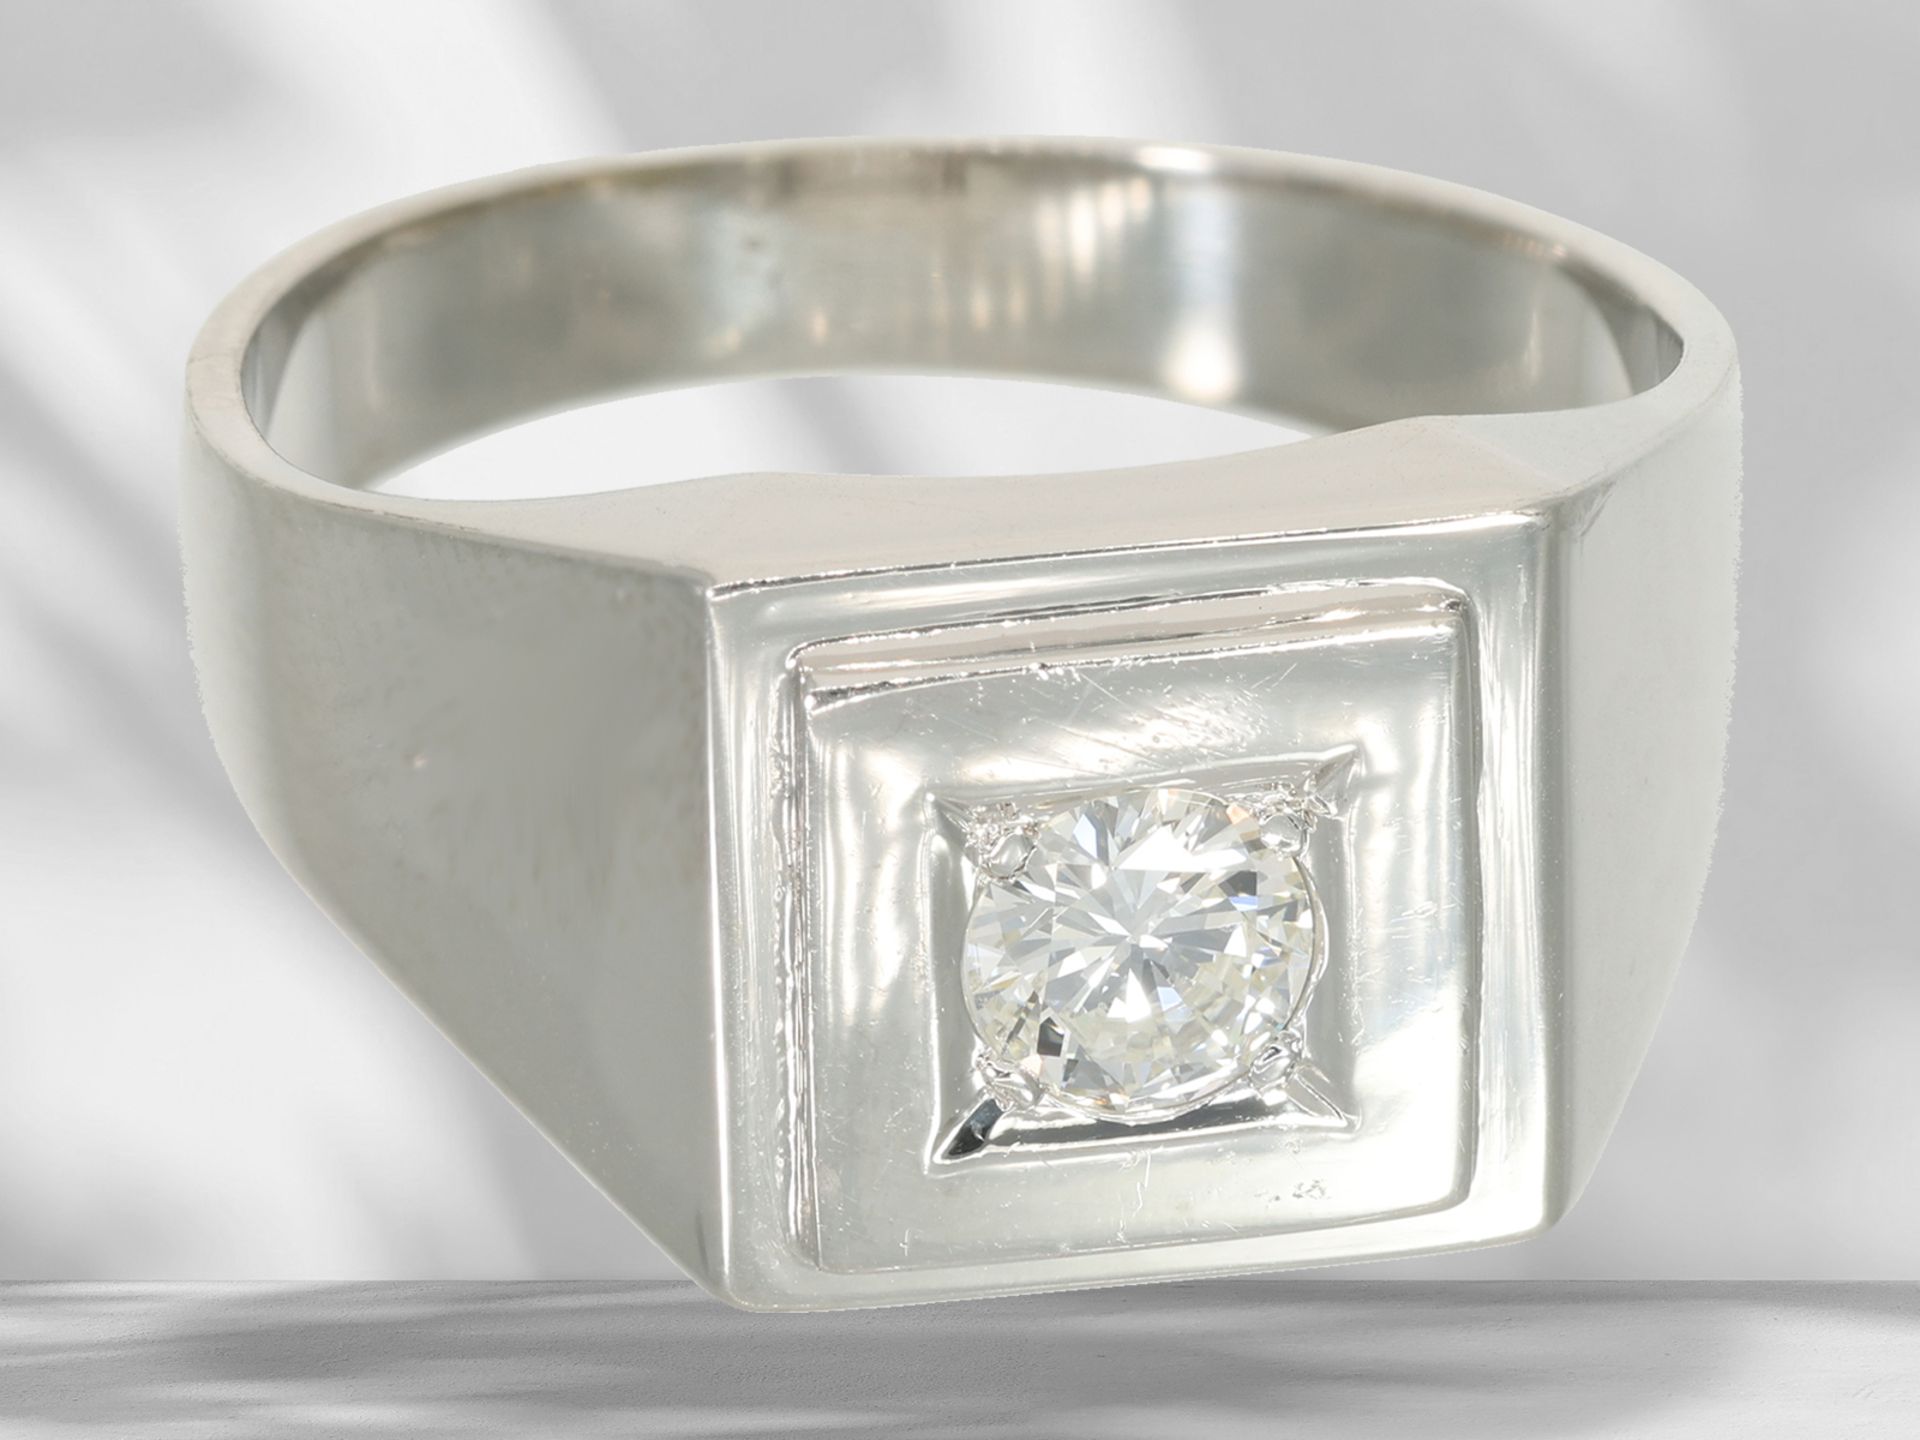 White gold vintage solitaire brilliant-cut diamond gold ring, brilliant-cut diamond of approx. 0.45c - Image 3 of 4